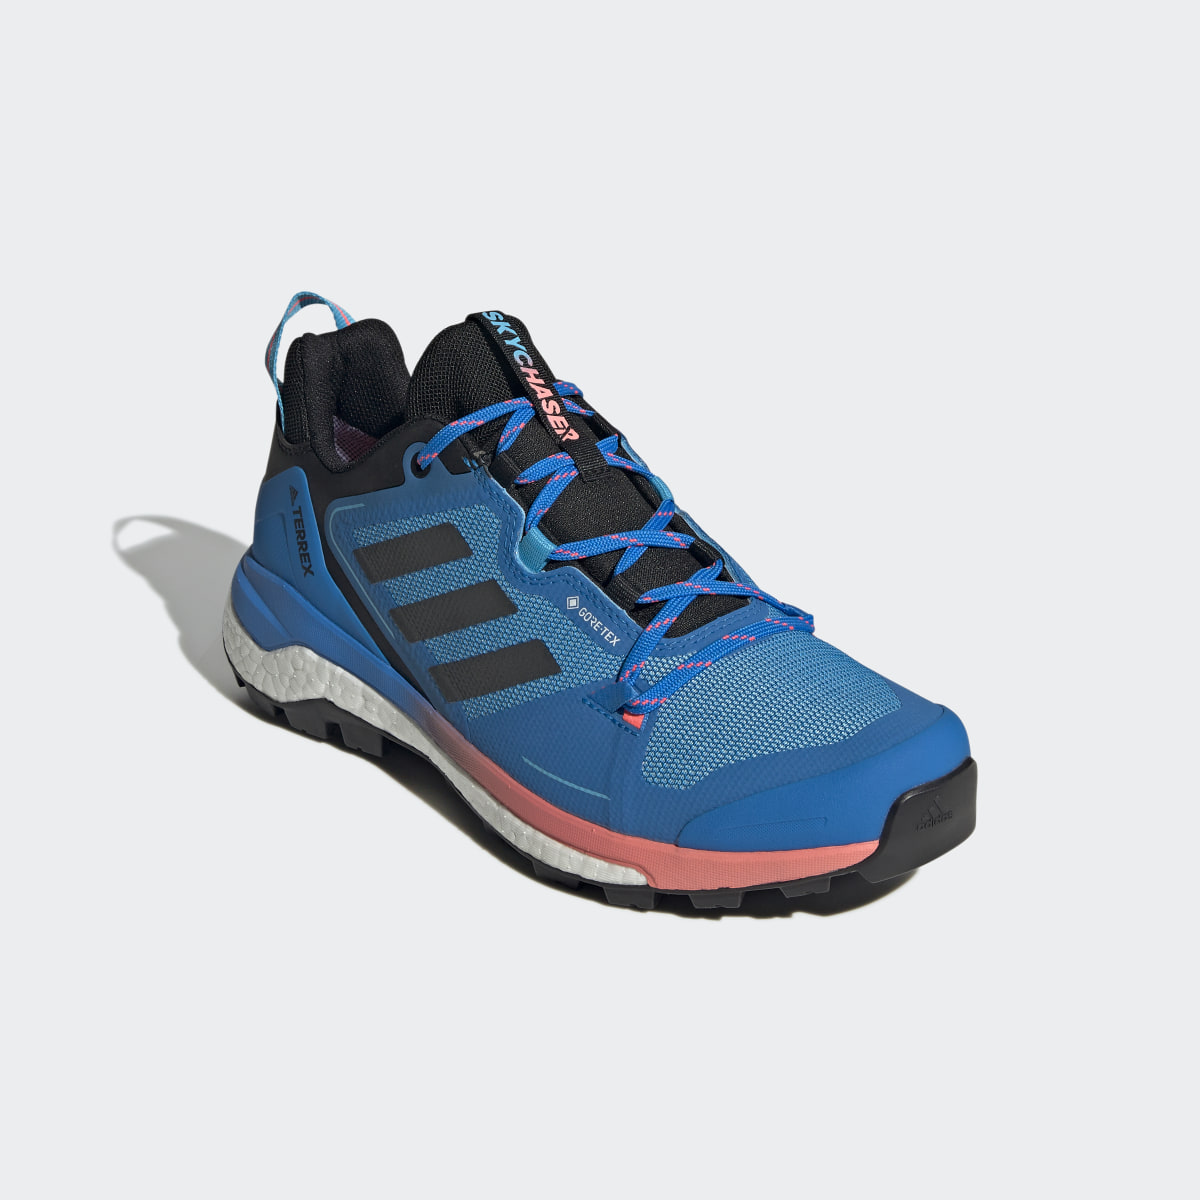 Adidas Terrex Skychaser GORE-TEX 2.0 Hiking Shoes. 8